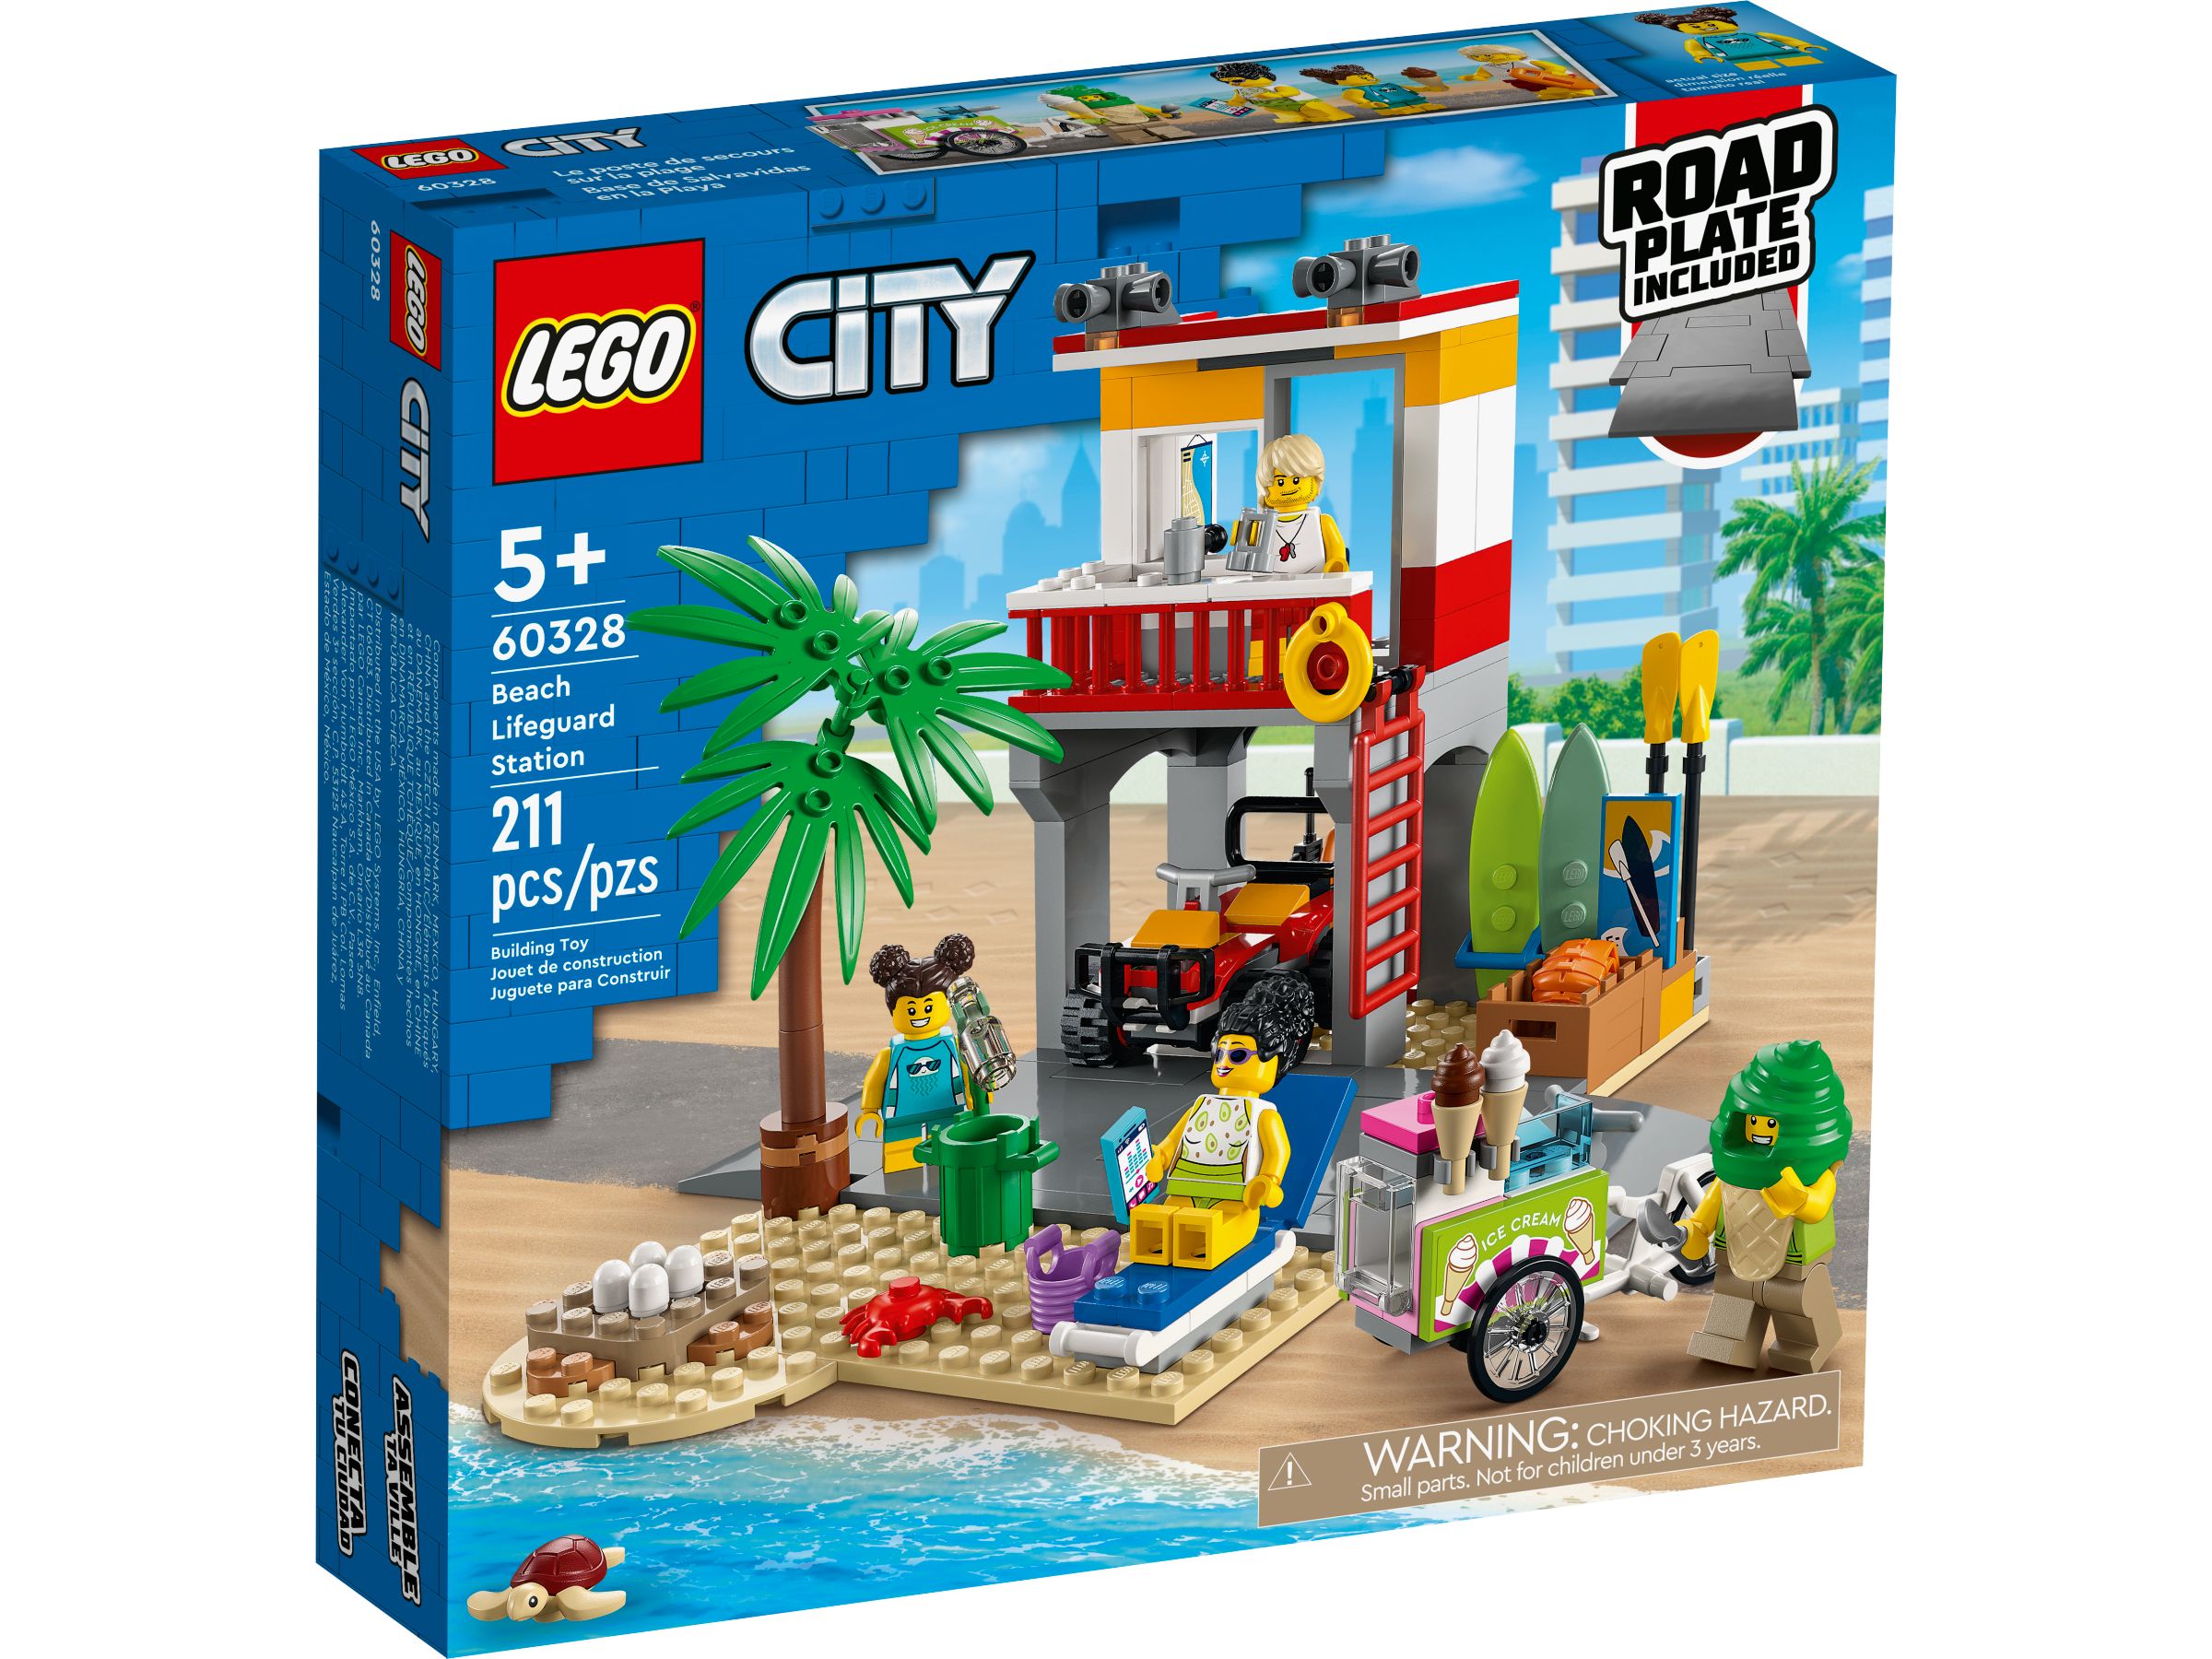 LEGO City 60328 Rettungsschwimmer-Station LEGO_60328_alt1.jpg